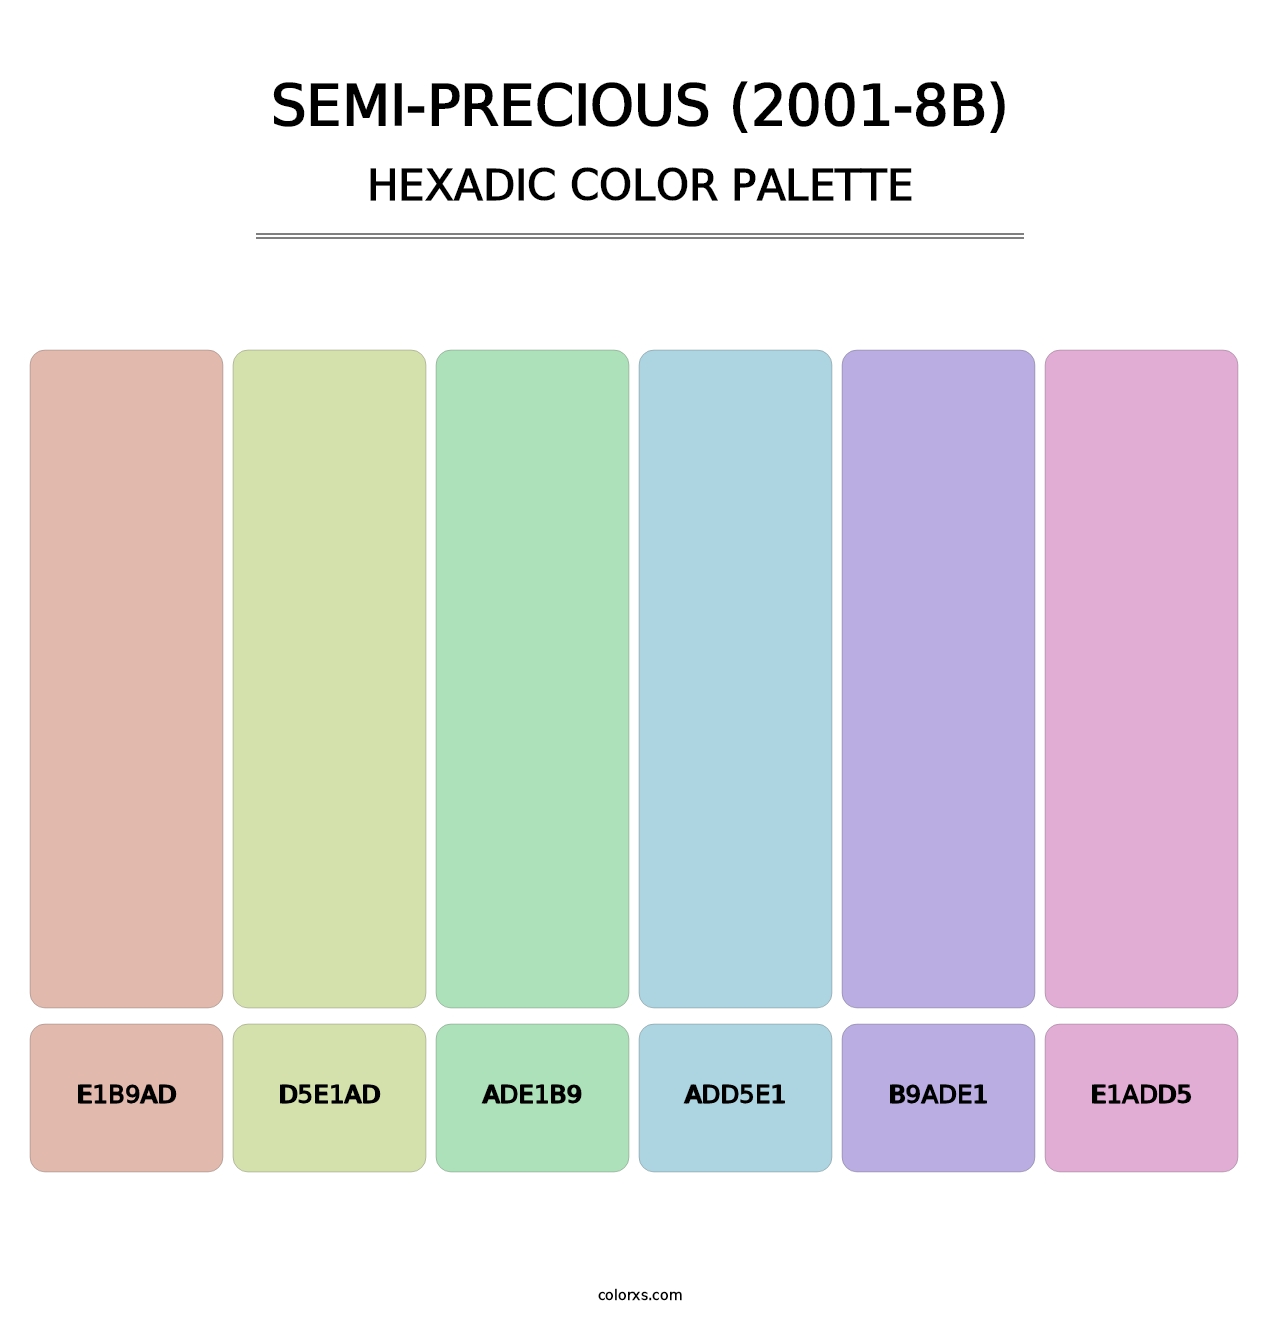 Semi-Precious (2001-8B) - Hexadic Color Palette